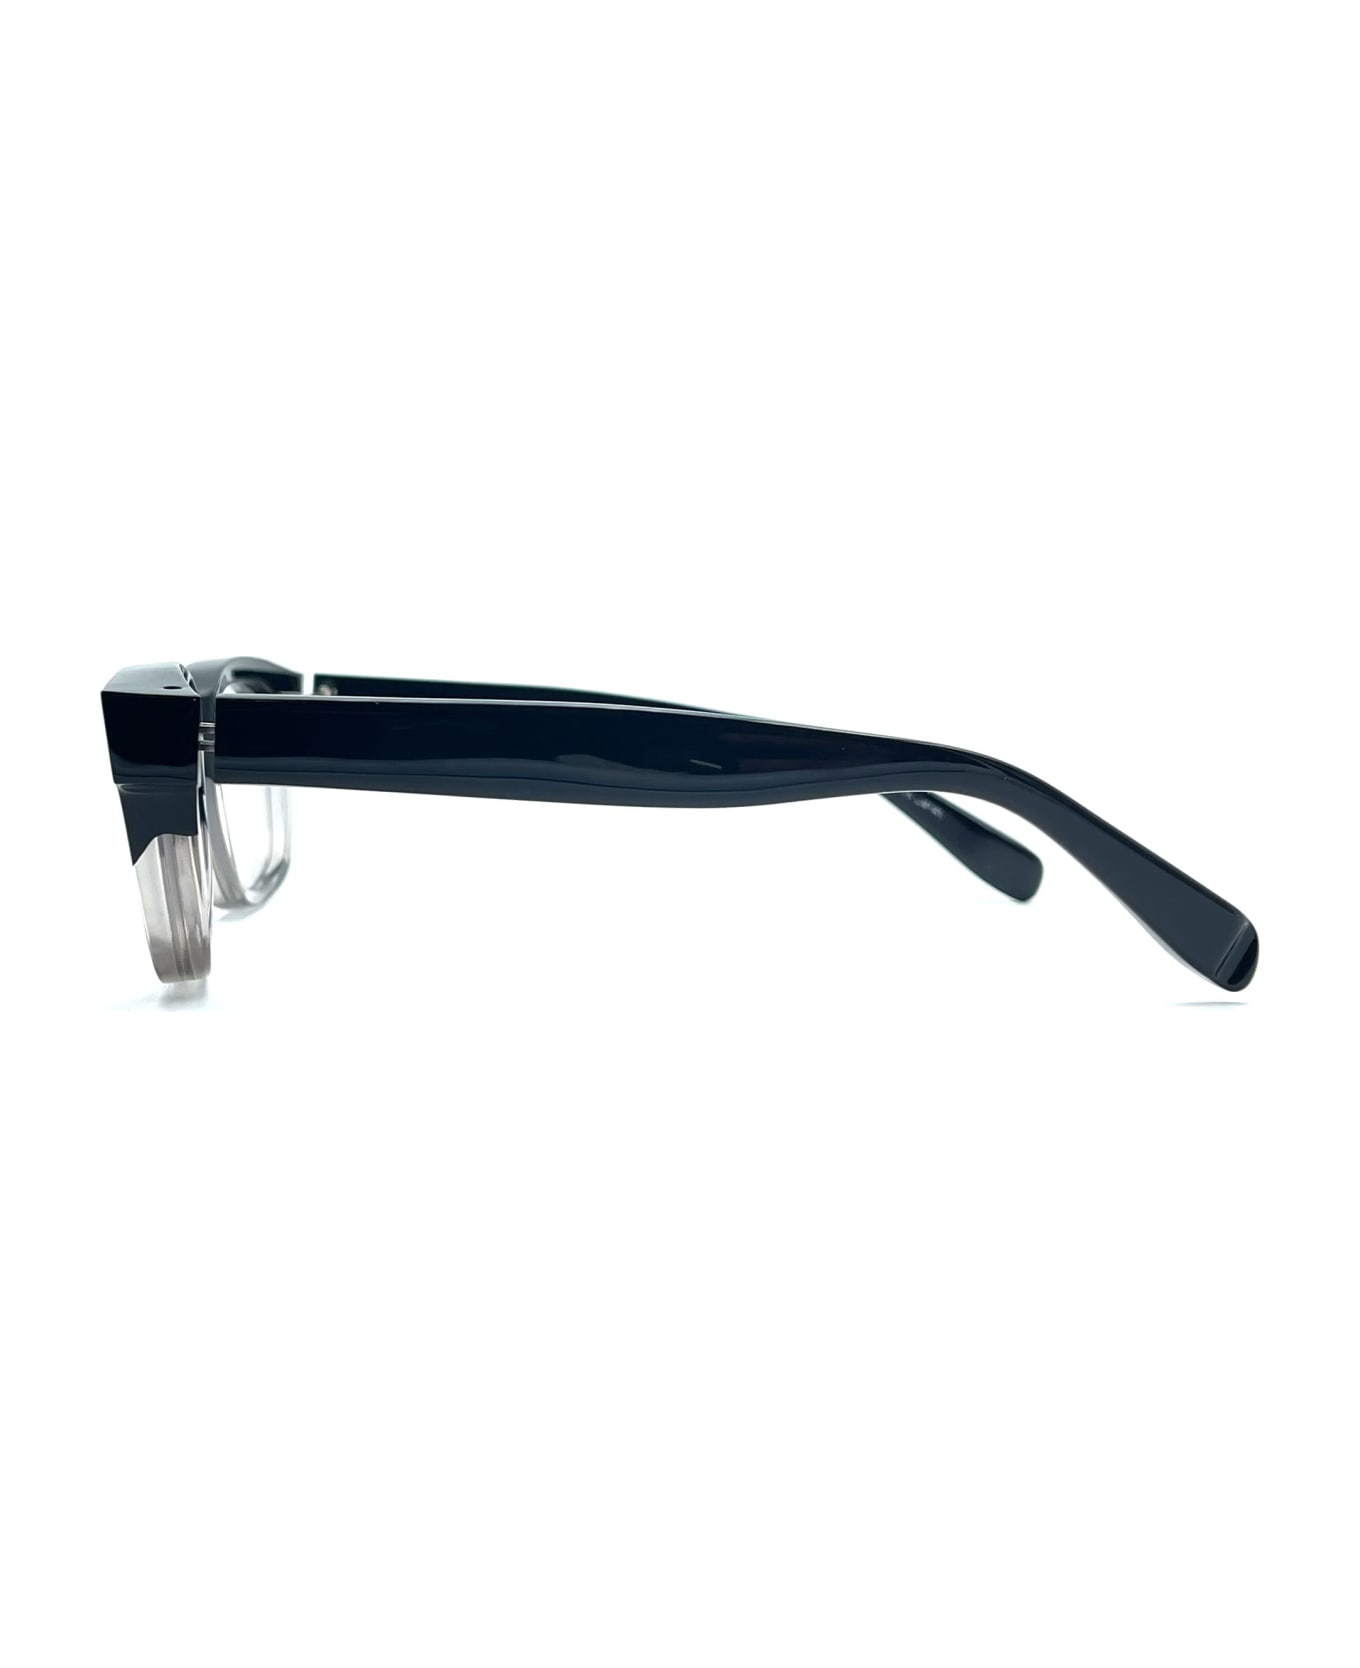 FACTORY900 Rf-150 - Black Two-tone Glasses - Black